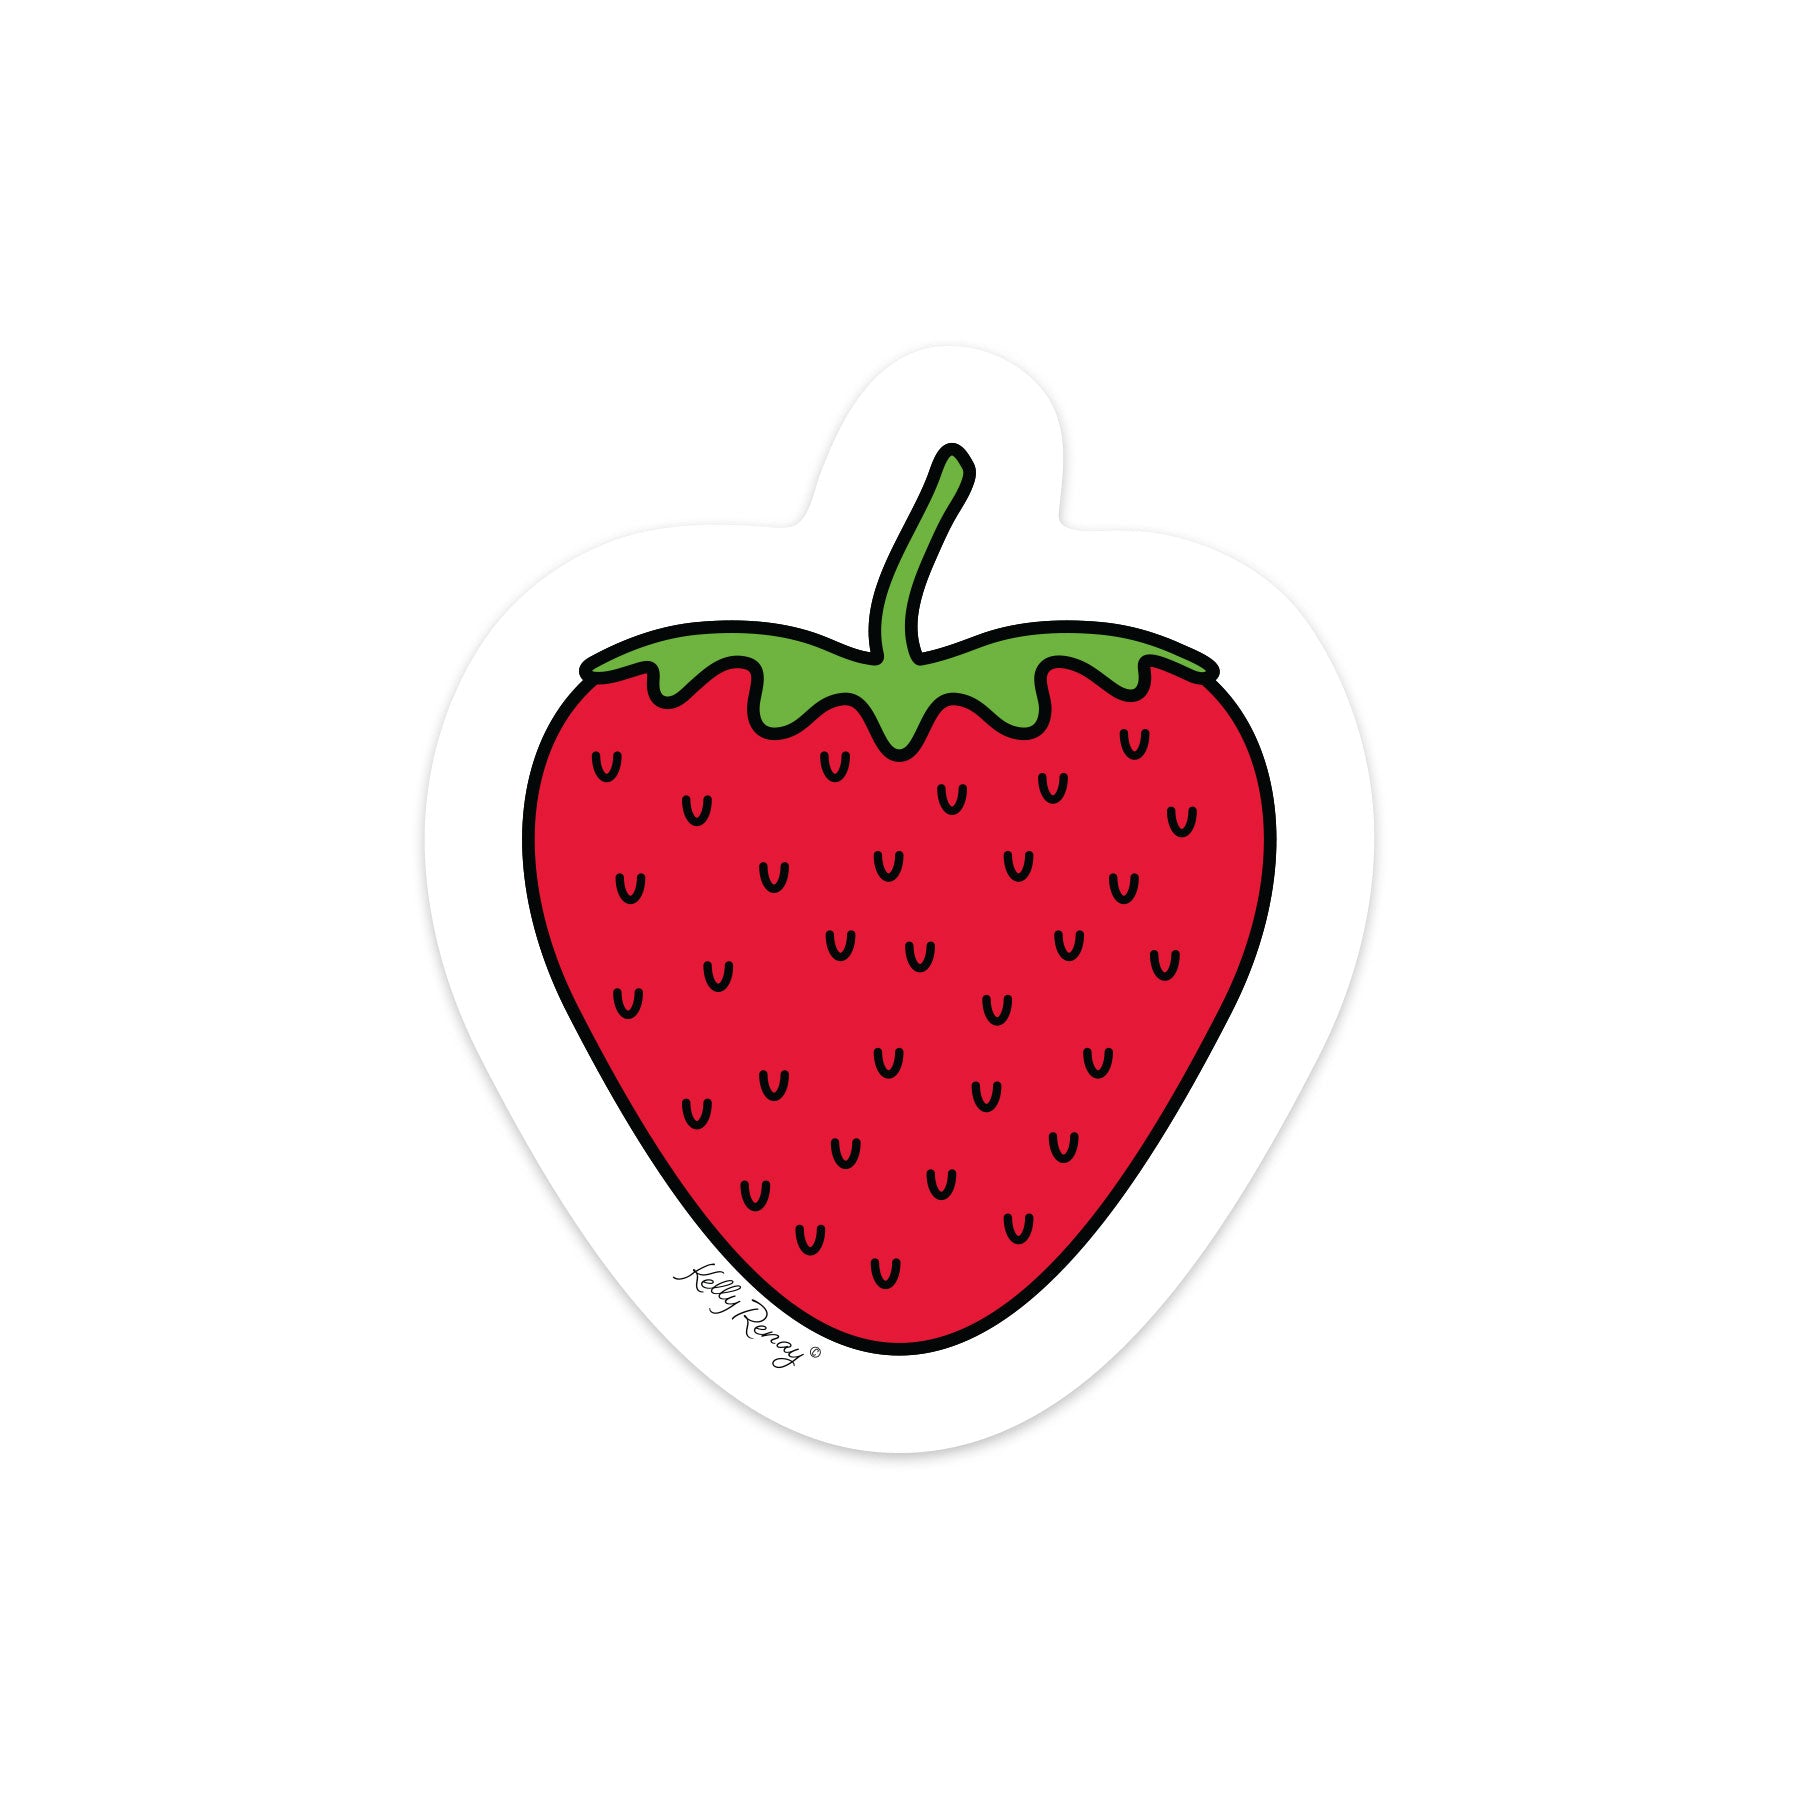 Strawberry Sticker – Kelly Renay